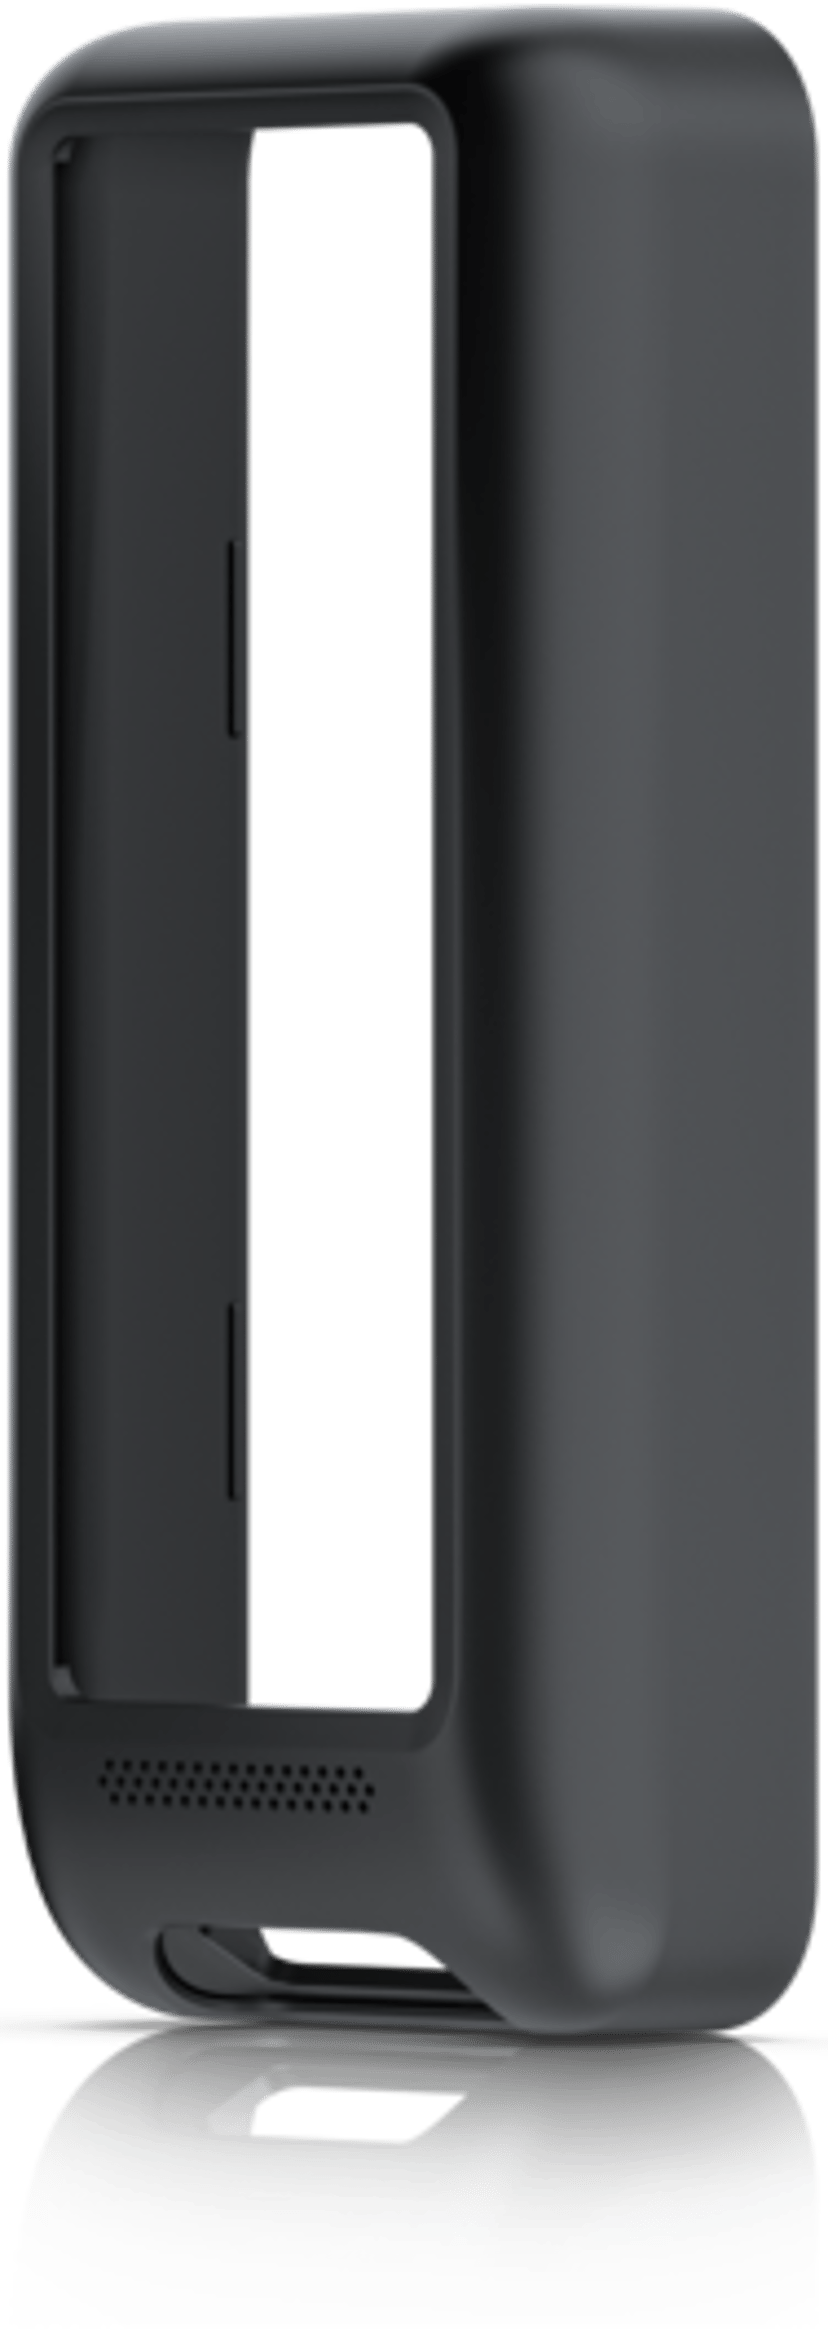 Ubiquiti UniFi Protect G4 Doorbell Cover, musta